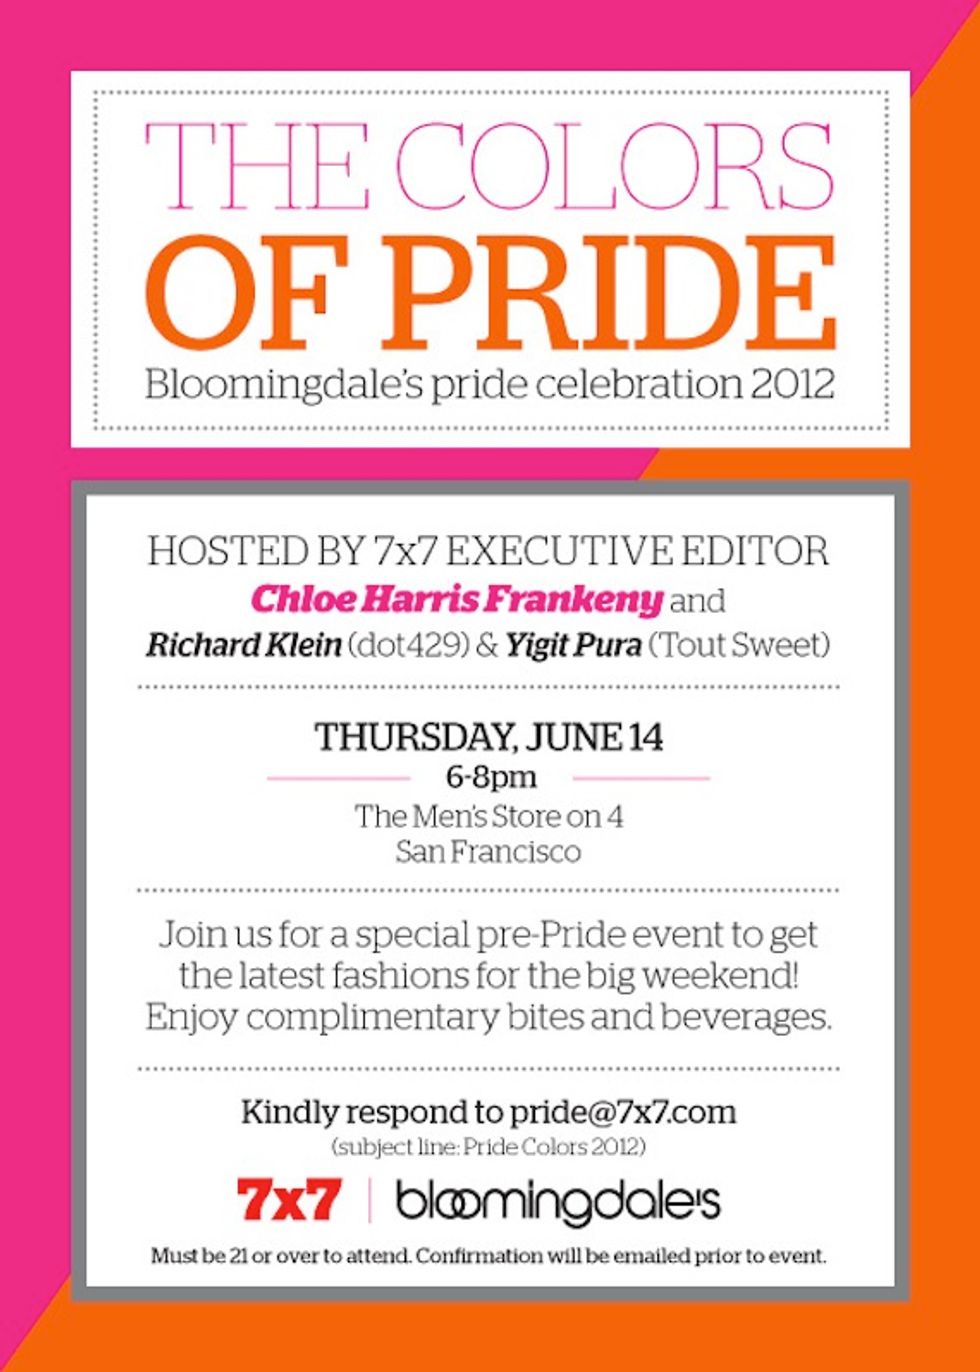 You're Invited: Bloomingdale's Pride Celebration 2012